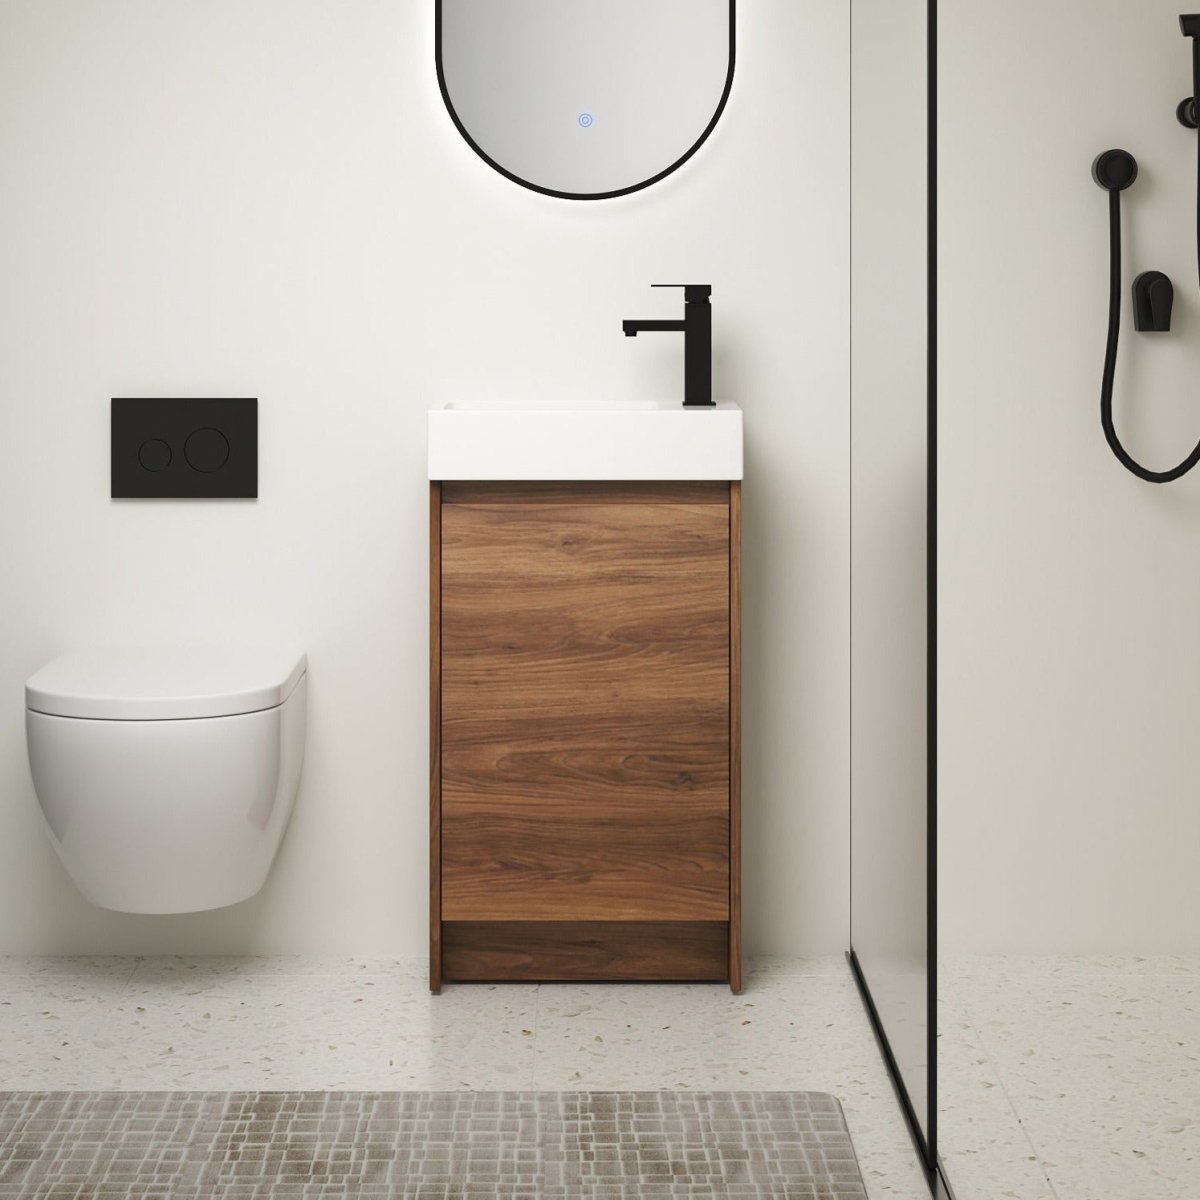 ExBrite Bathroom Vanity 18" With Single Sink For Small Bathroom